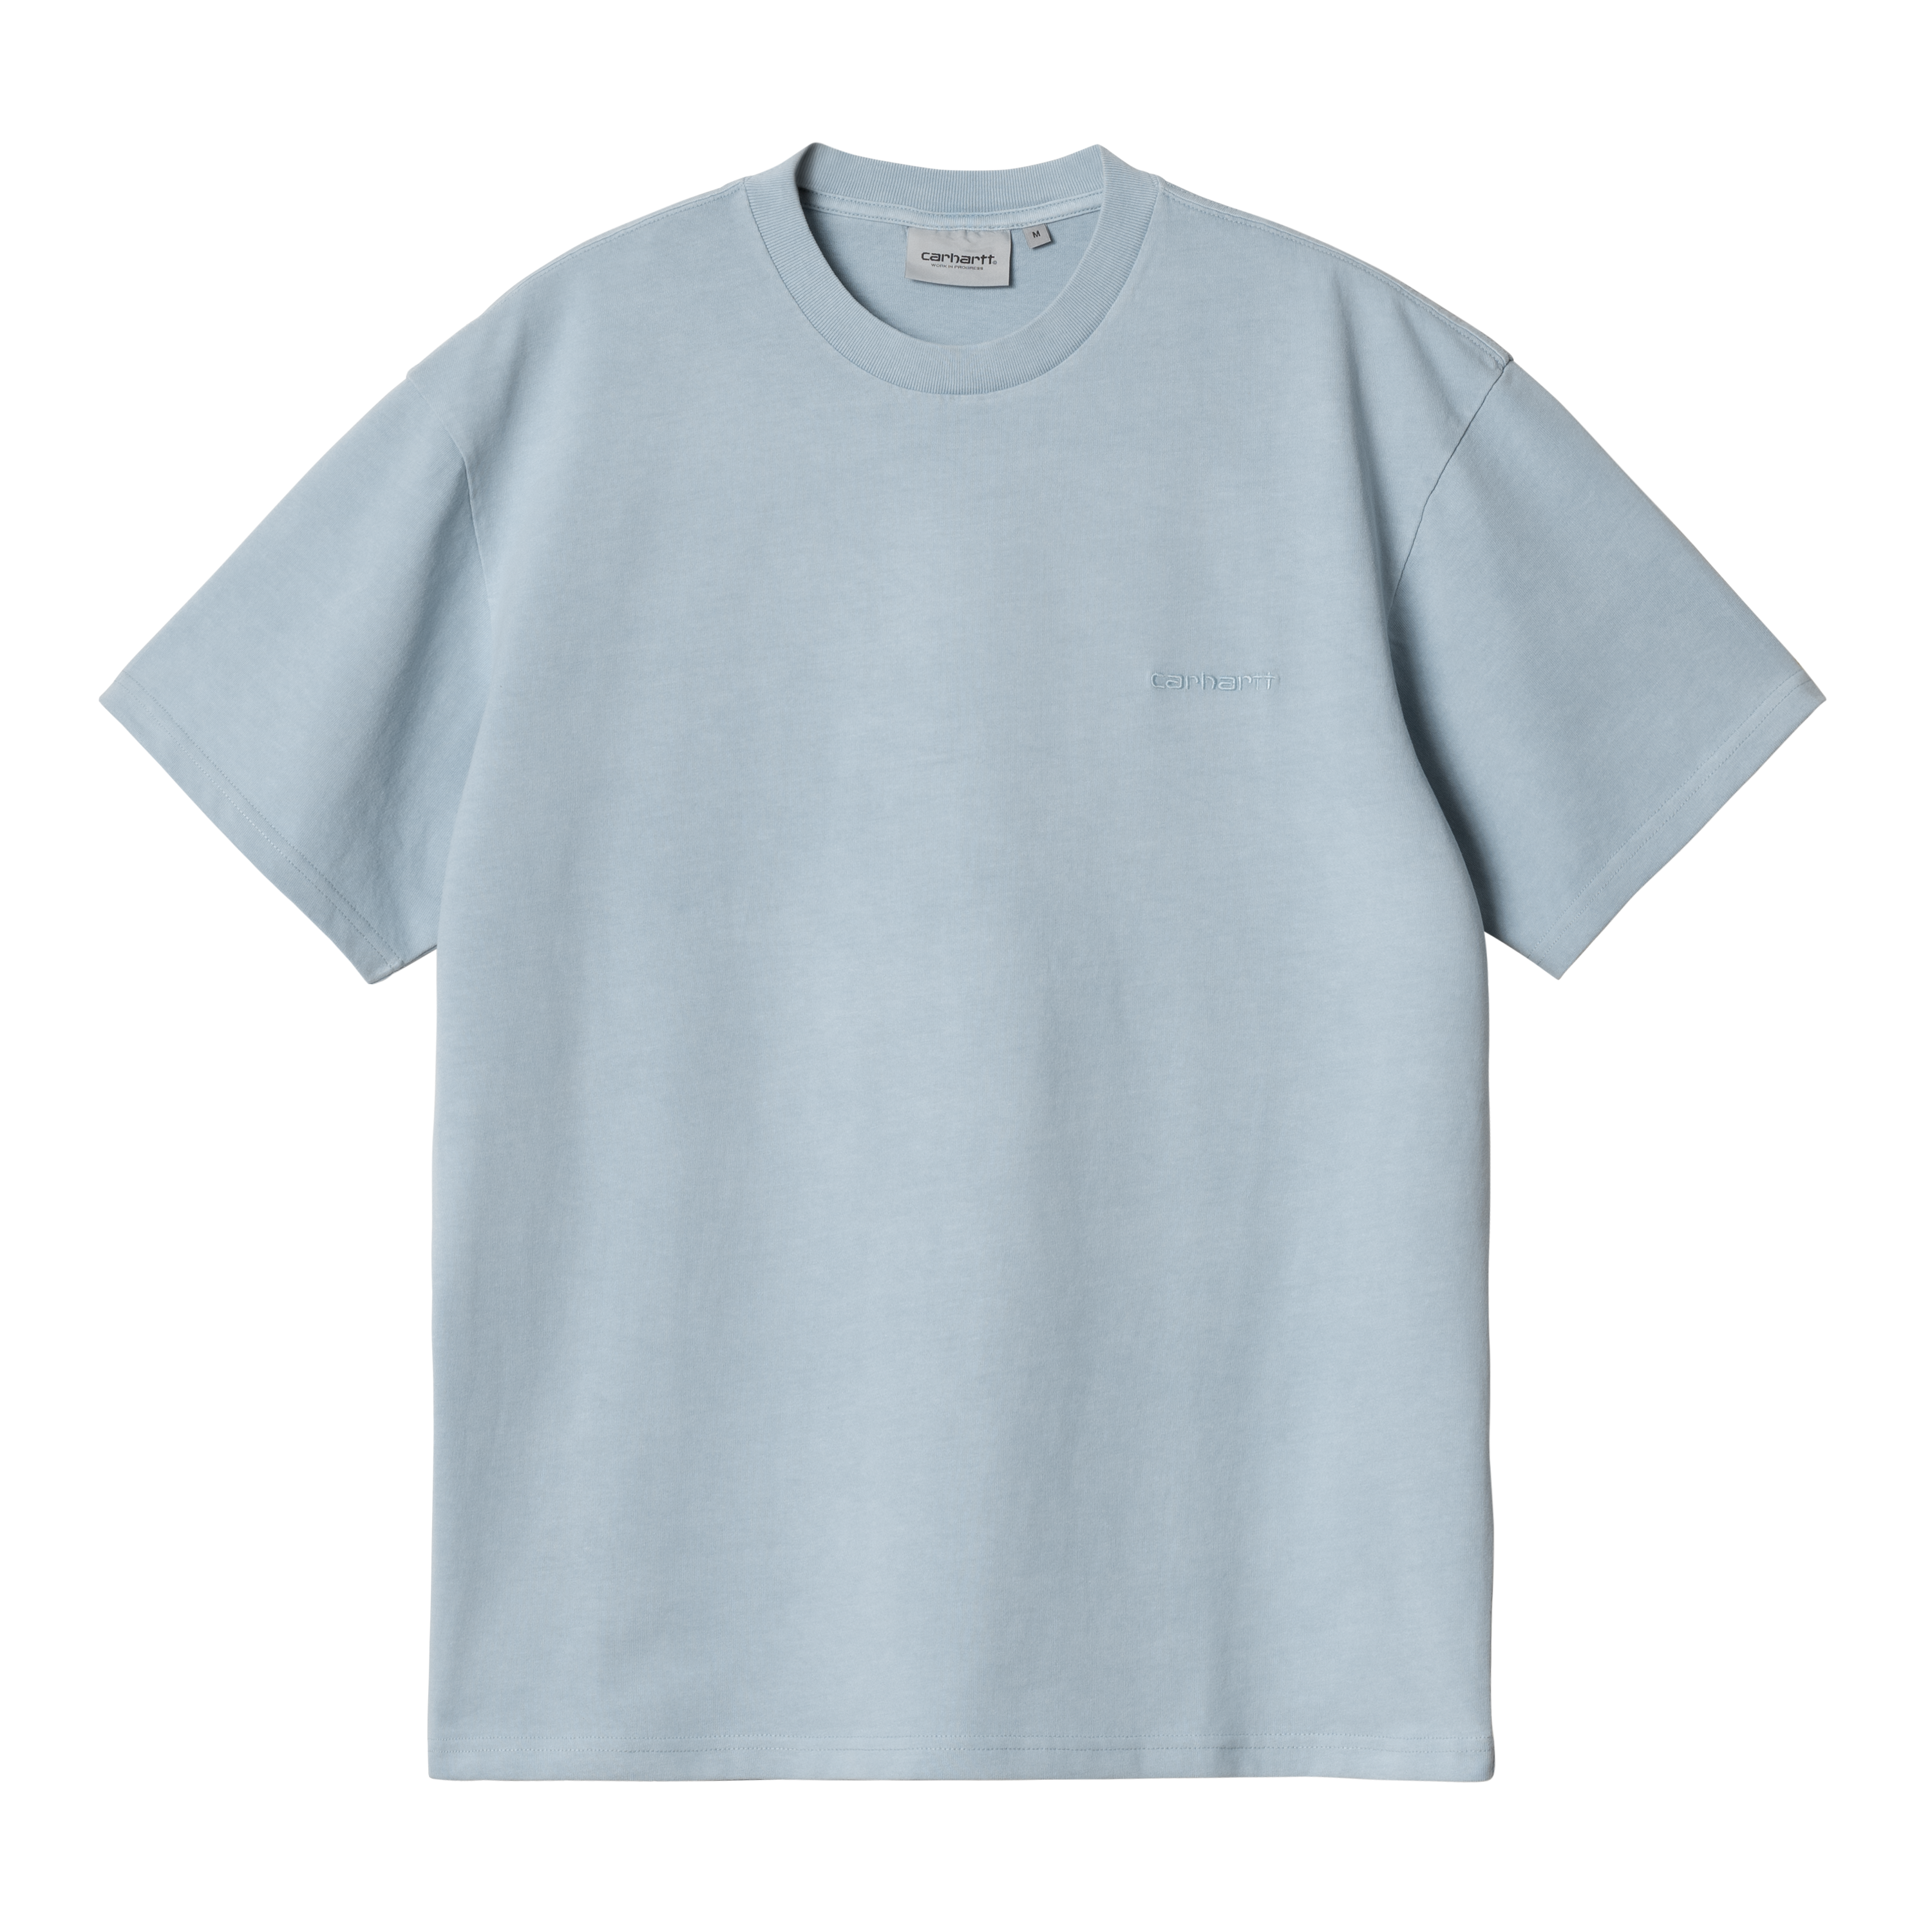 Carhartt WIP Short Sleeve Duster Script T-Shirt in Blue